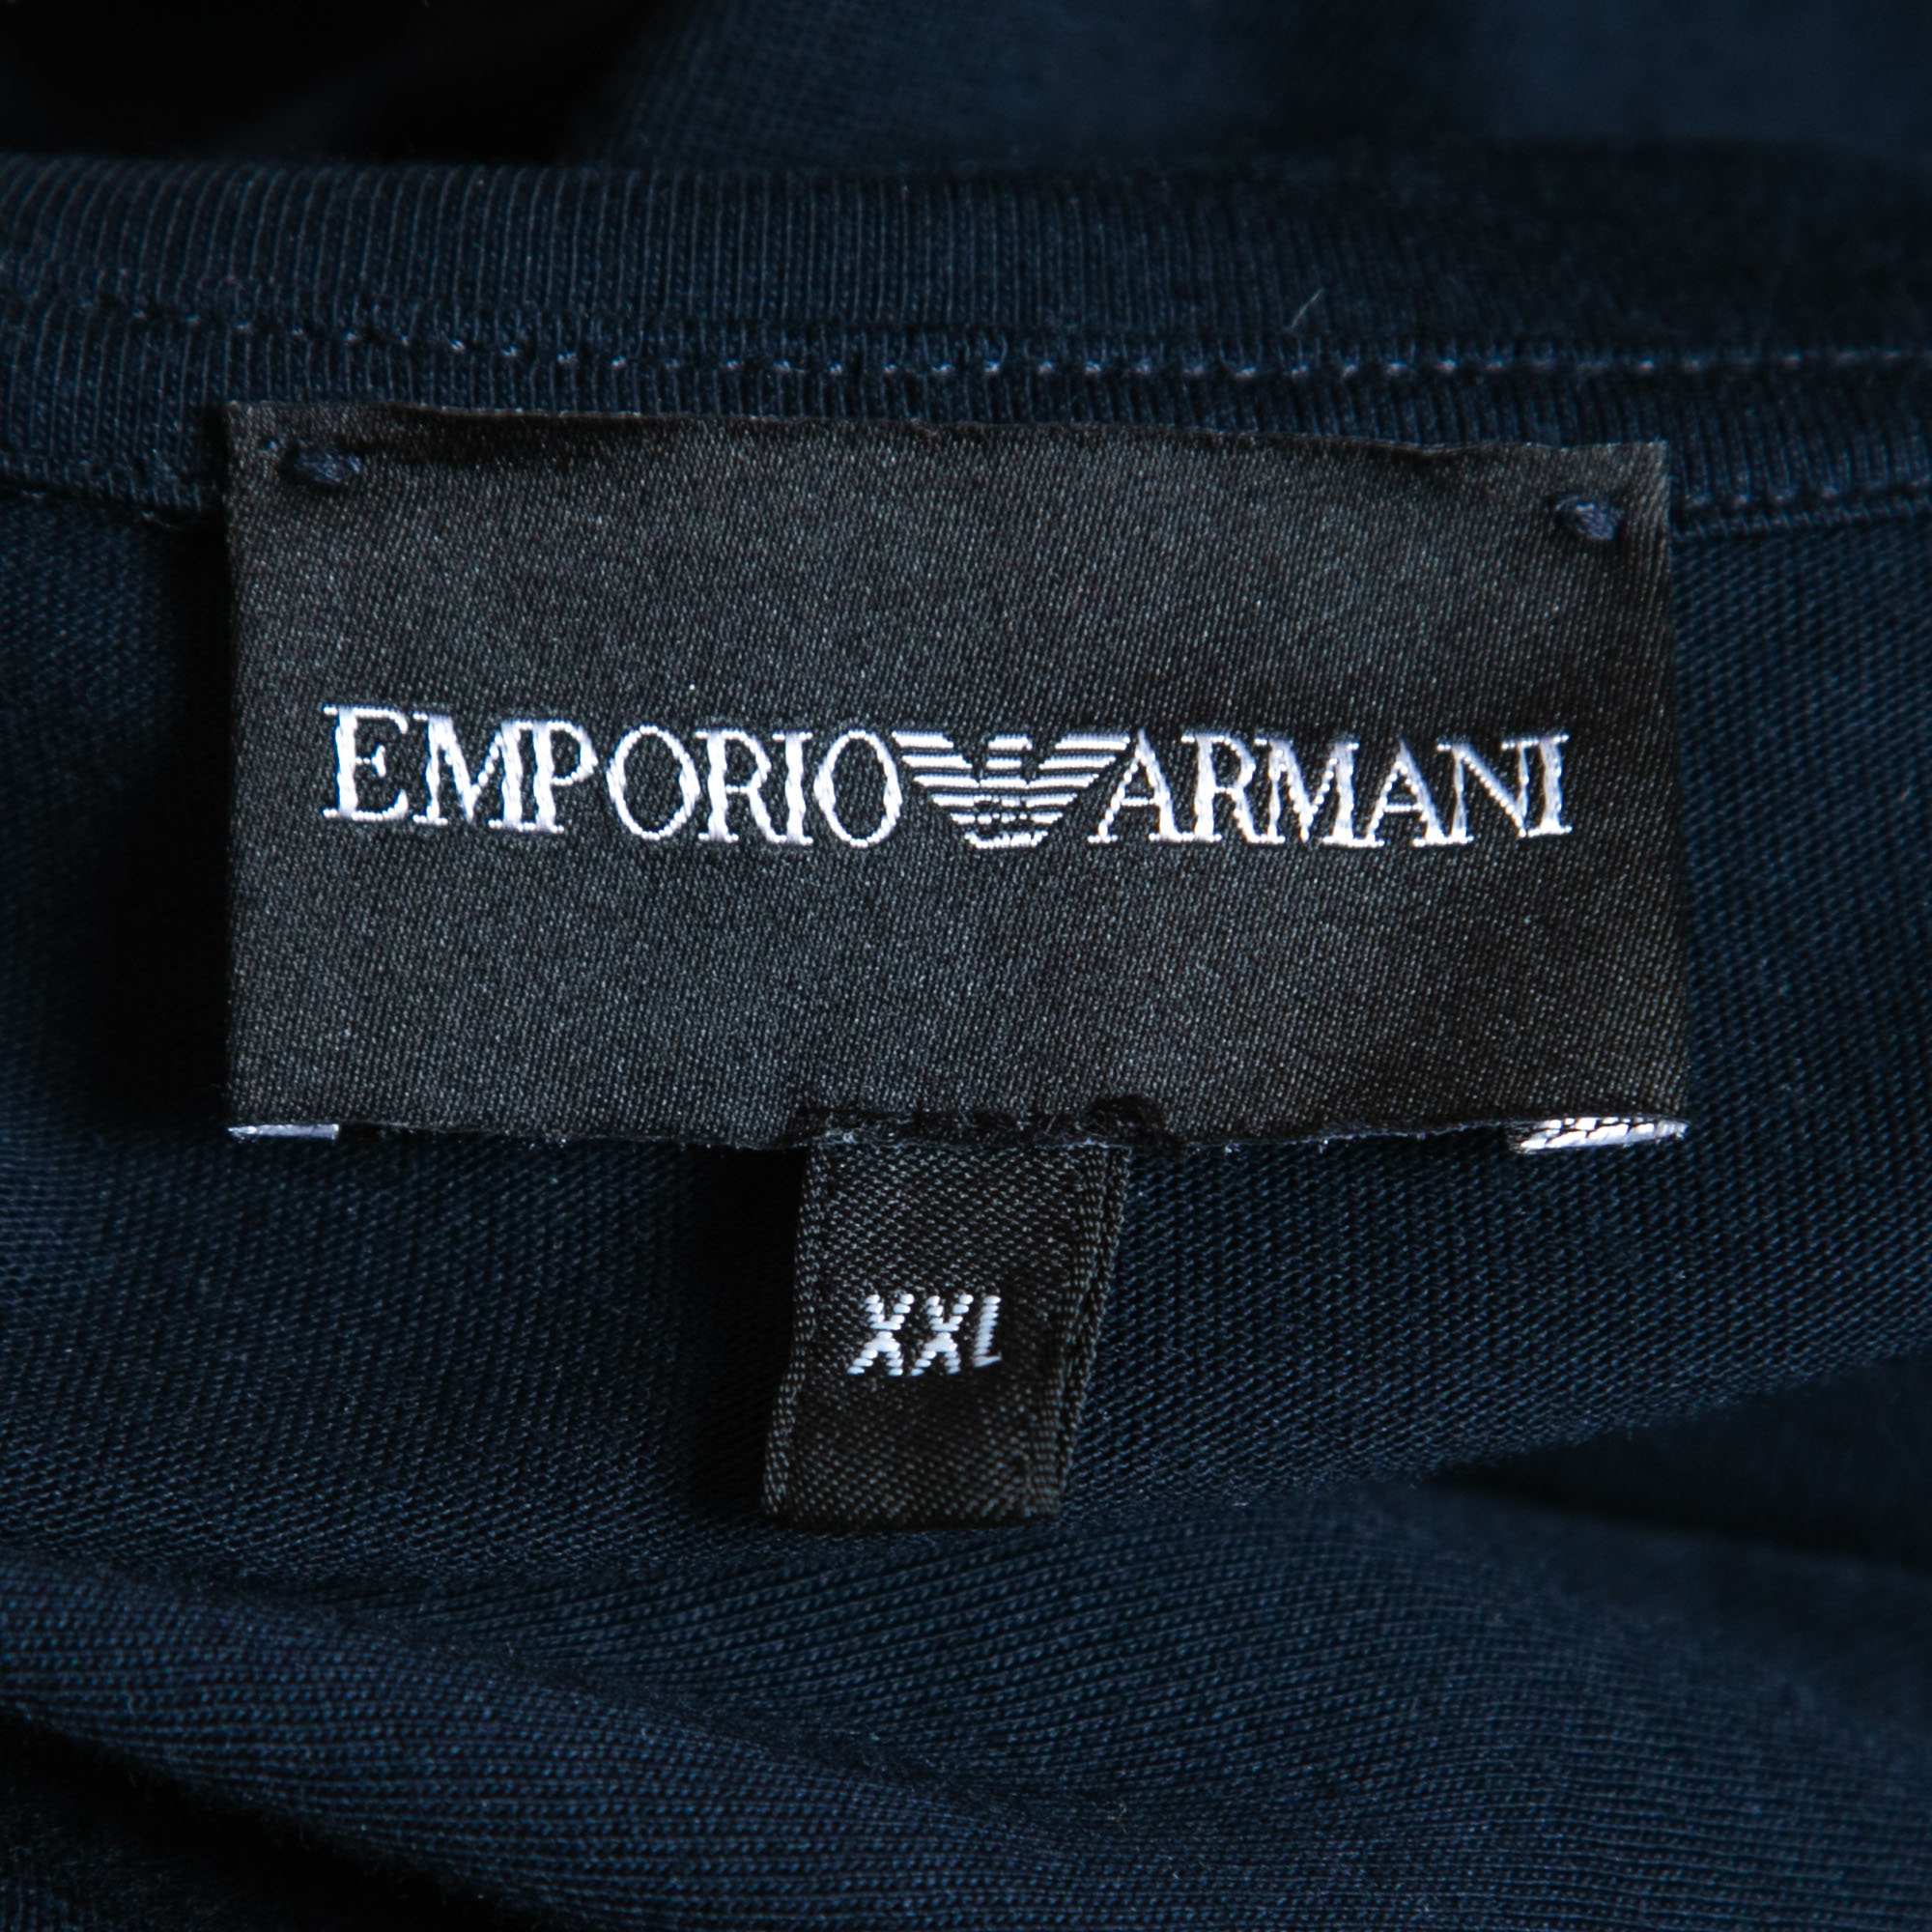 Emporio Armani Navy Blue Printed Cotton Knit T-shirt XXL